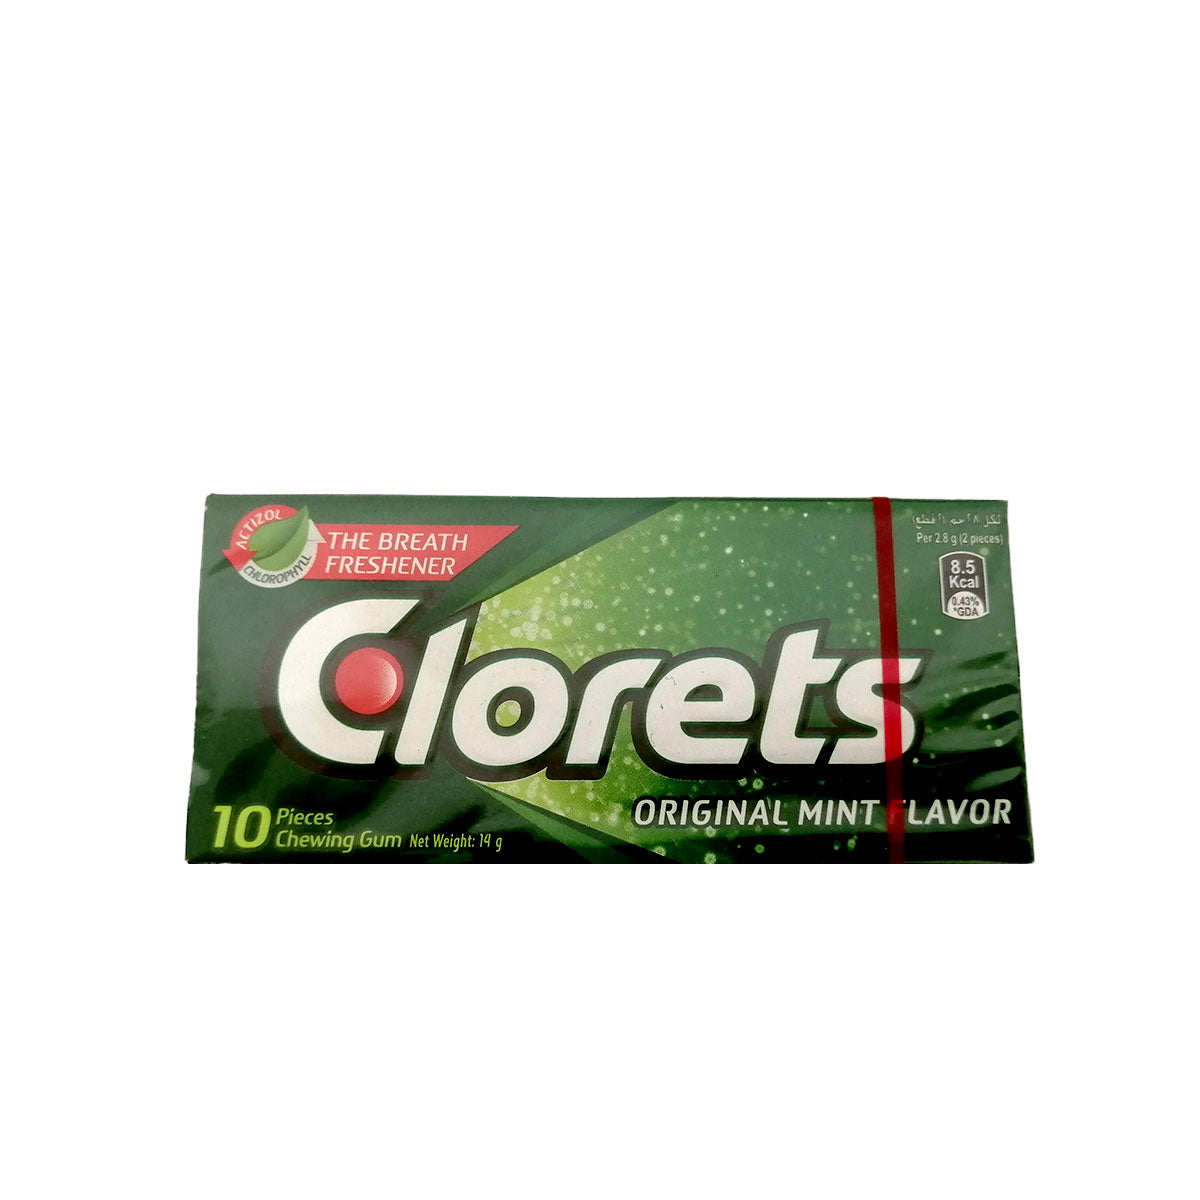 Chlorets Original Mint Flavor Chewing Gum 10 Pieces  كلورتس نكهة النعناع الأصلي علكة ١٠ قطع